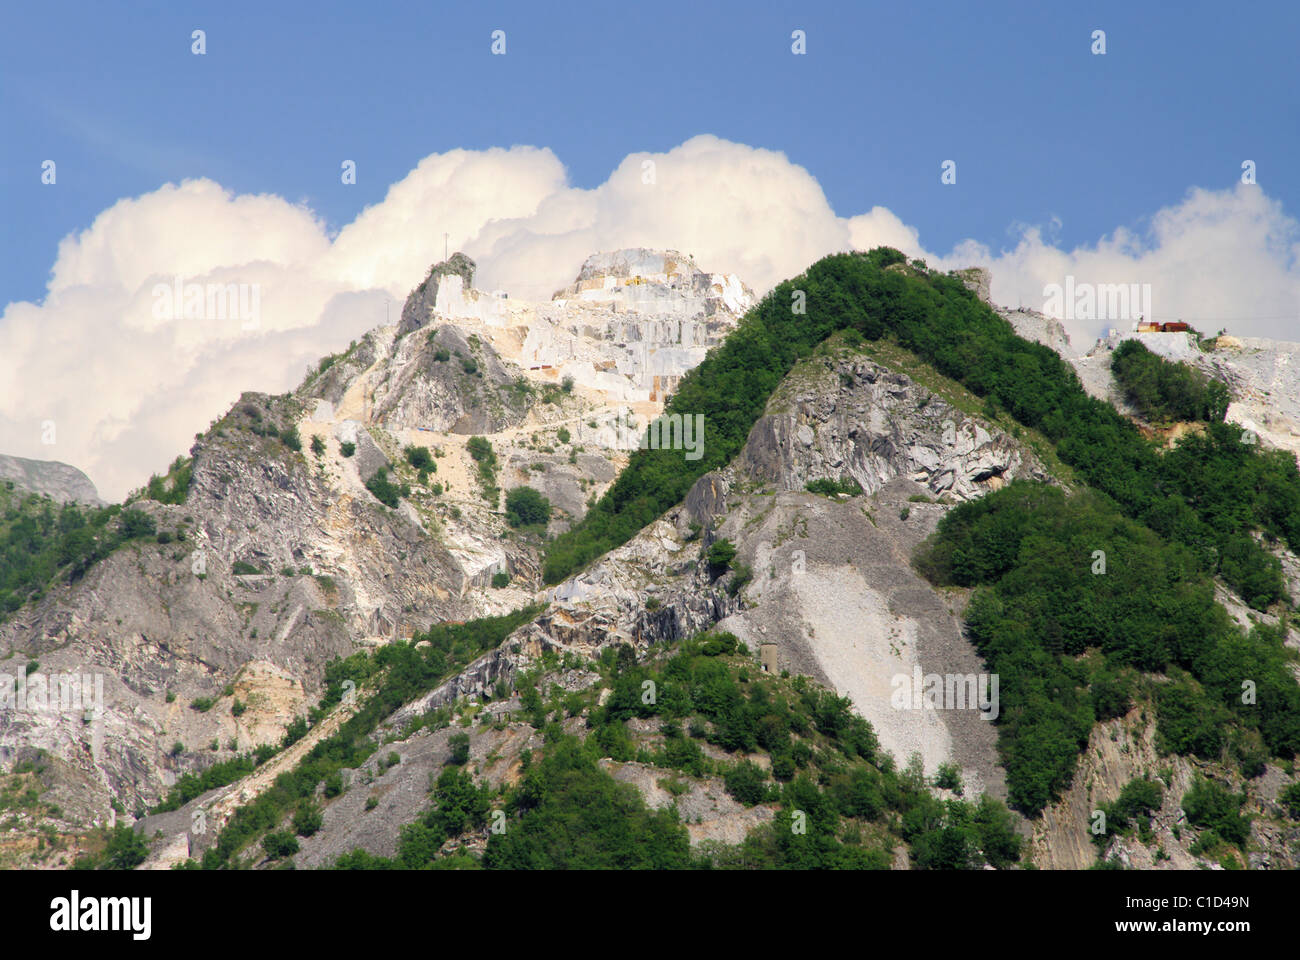 Carrara Marmor Steinbruch - Carrara marble stone pit 05 Stock Photo